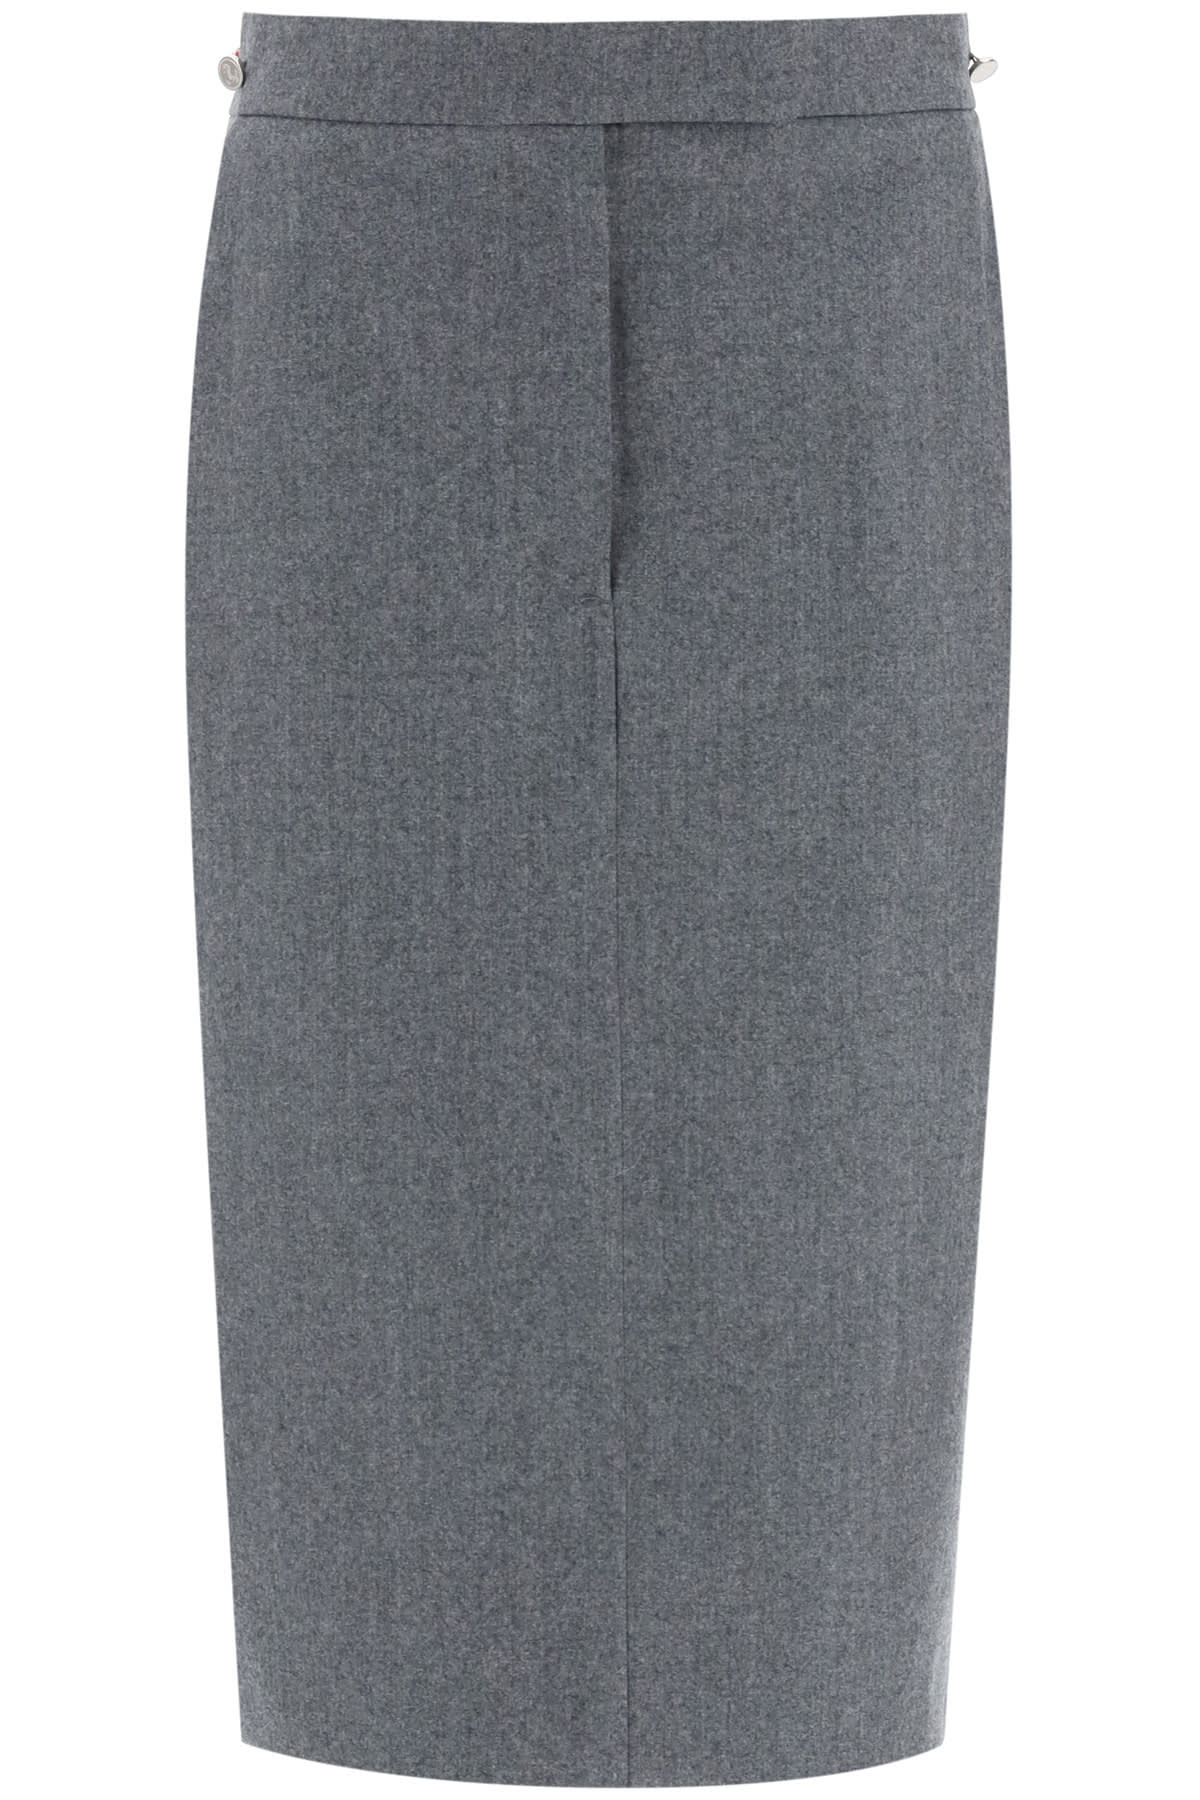 Thom Browne Pencil Skirt In Wool Flannel